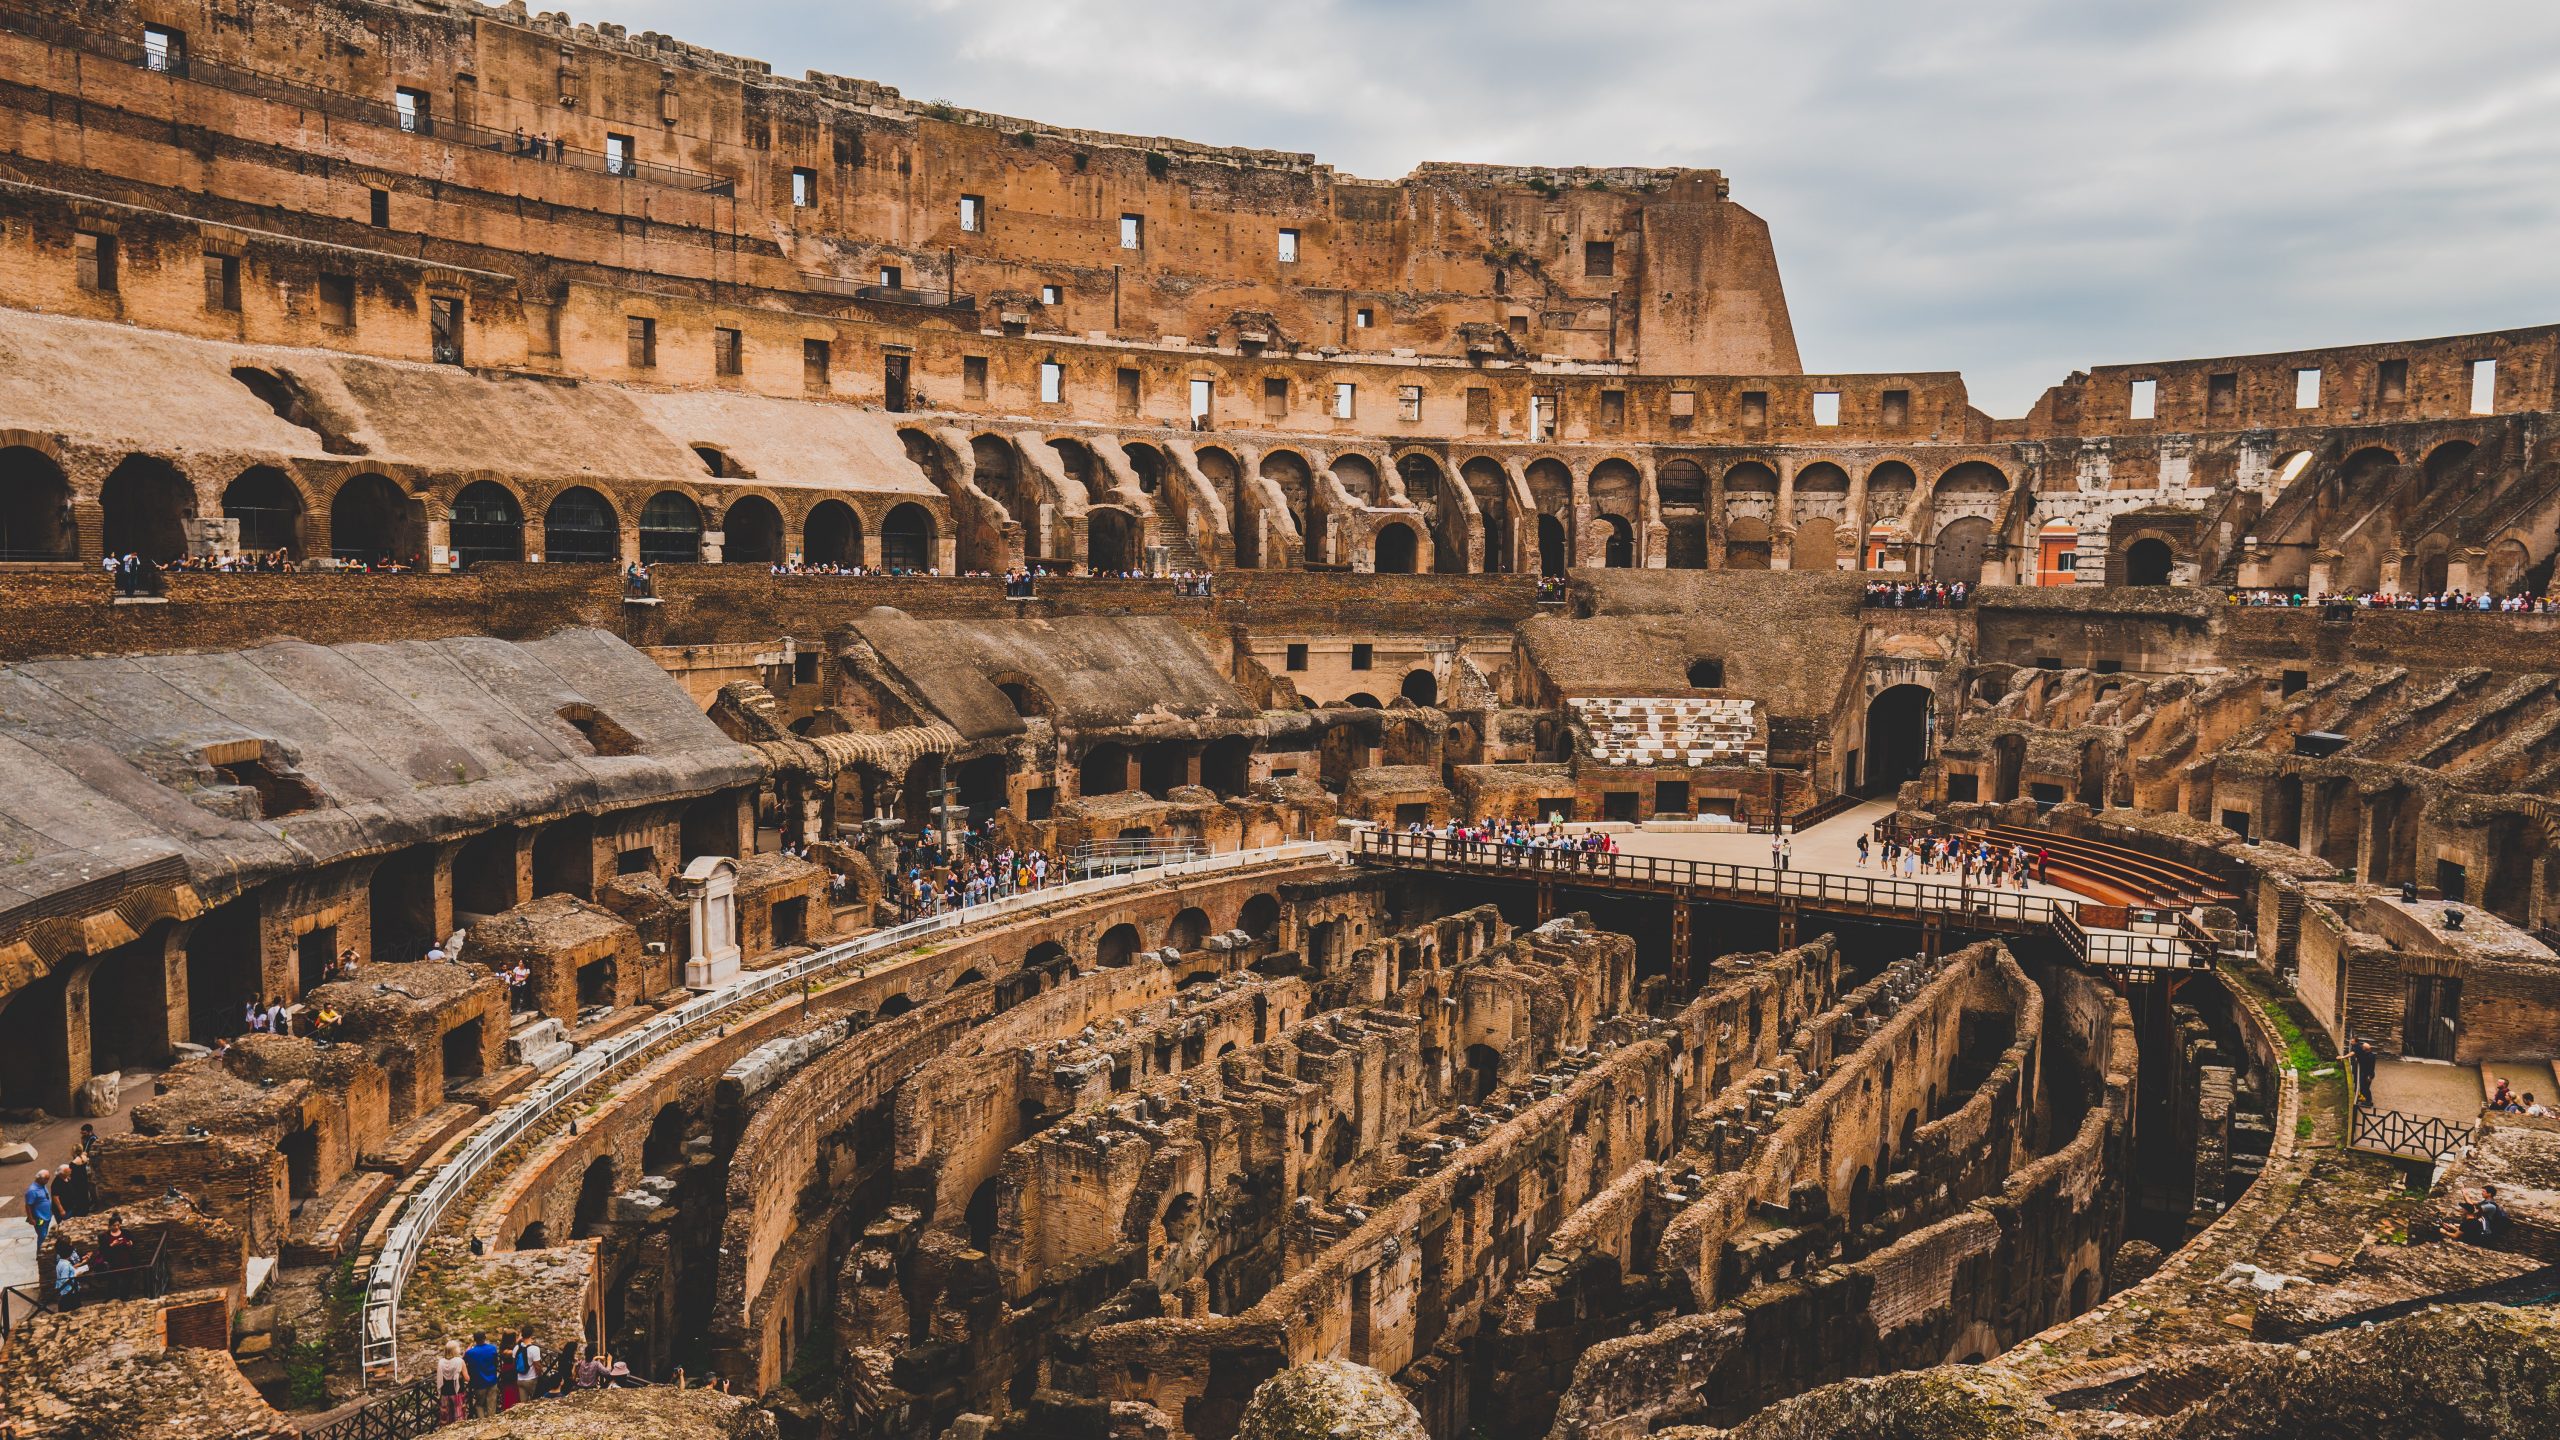  Italy unveils new hi-tech floor design for Colosseum area